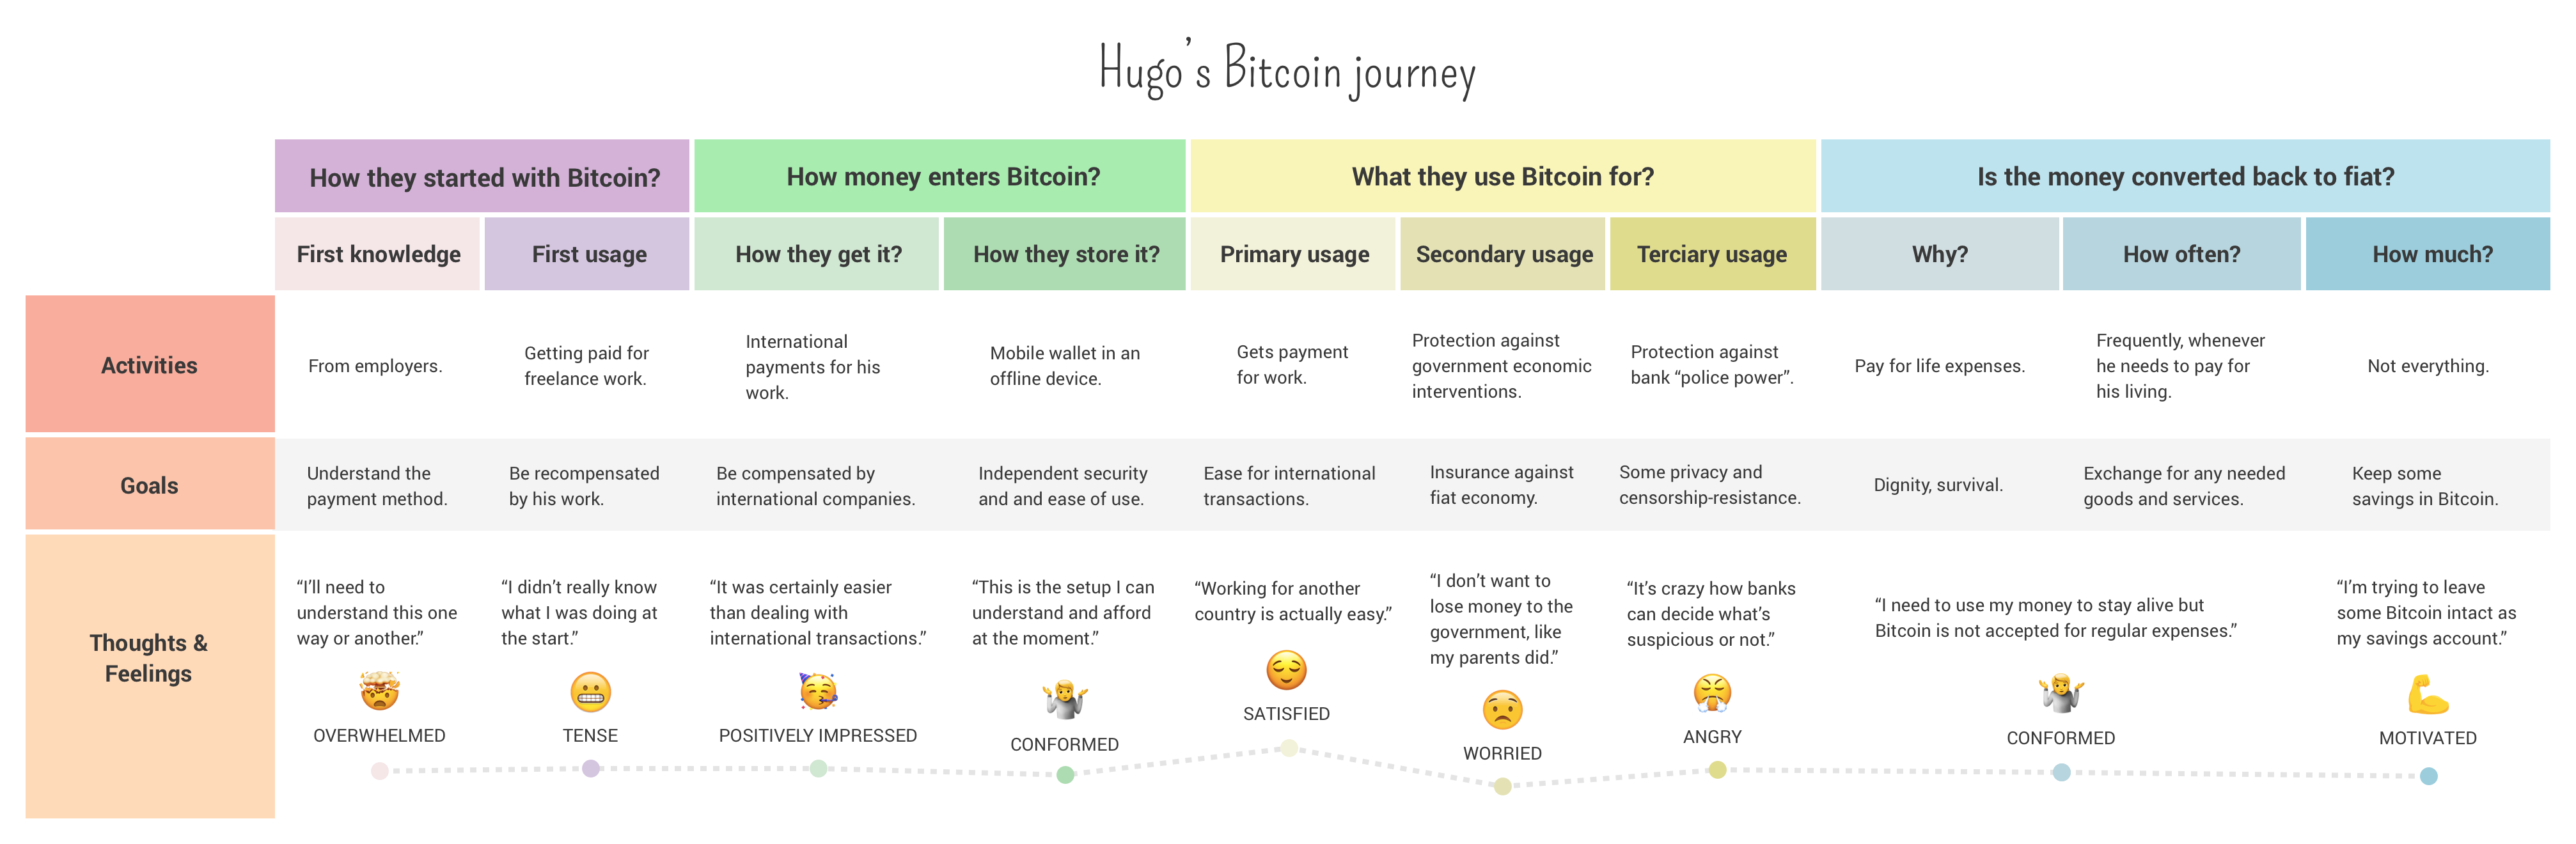 Hugo’s Bitcoin journey